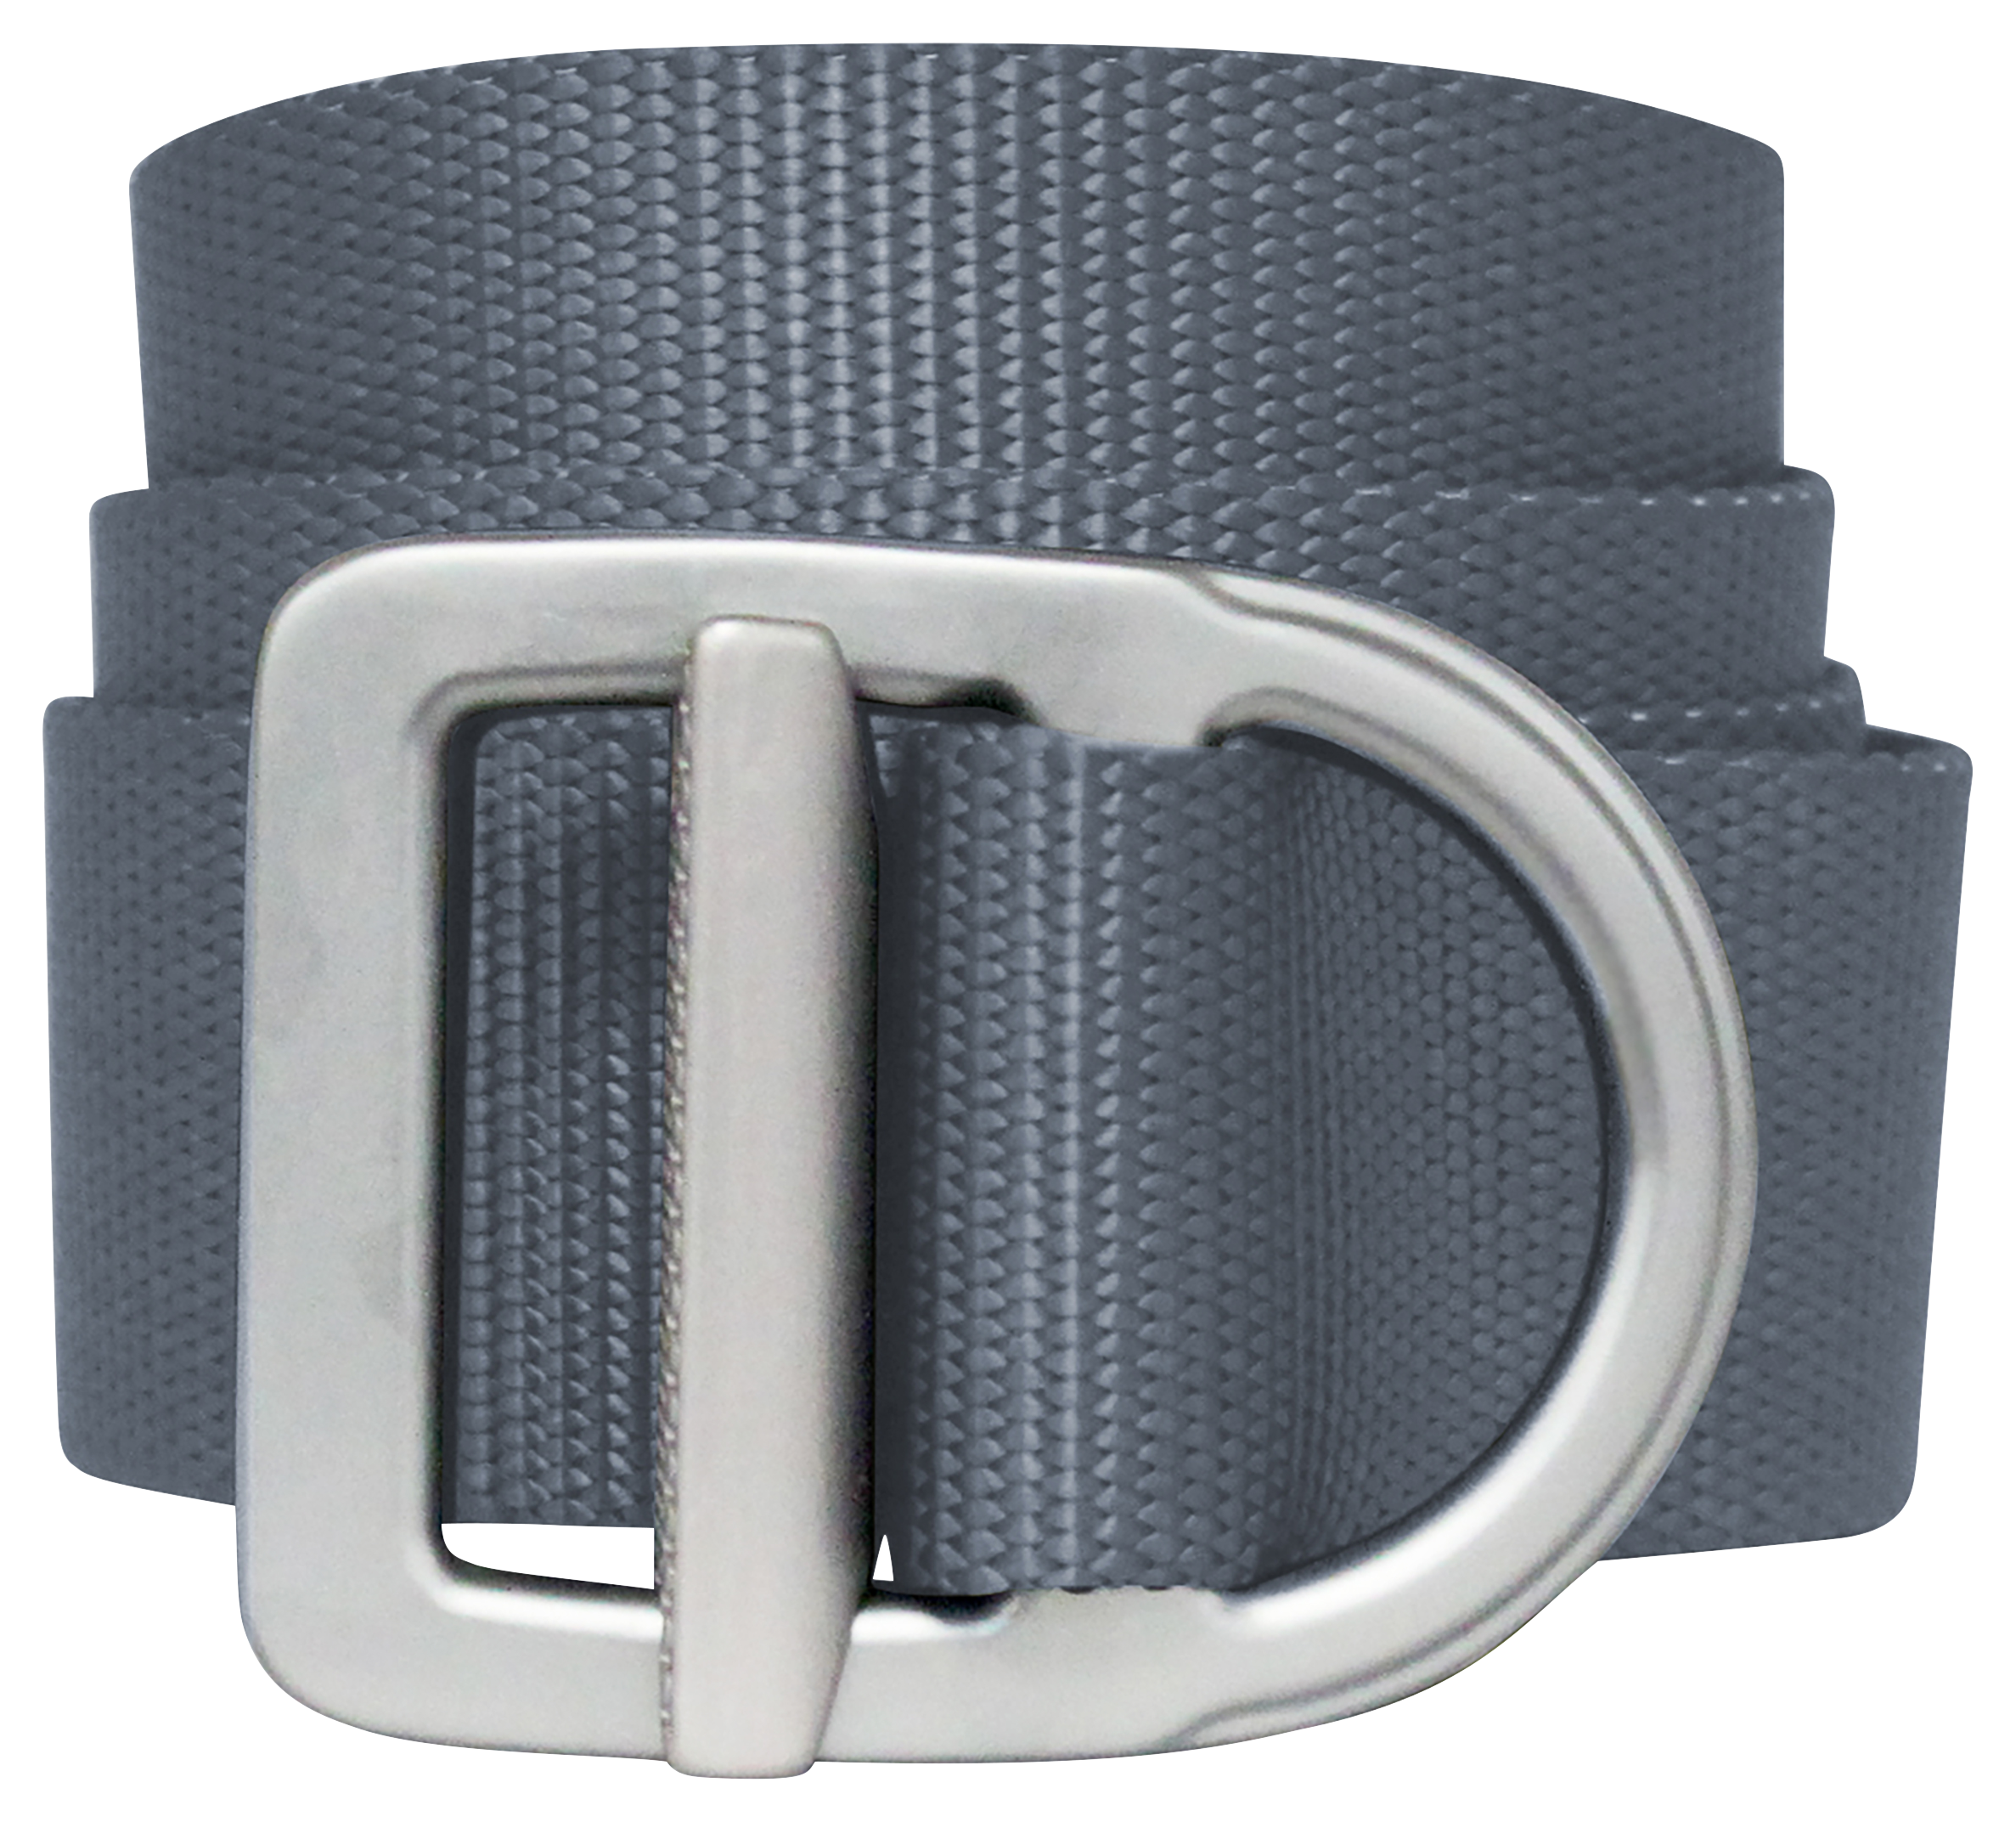 Bison Designs Last Chance Delta Light-Duty Belt for Men - Grey/Silver - 2XL